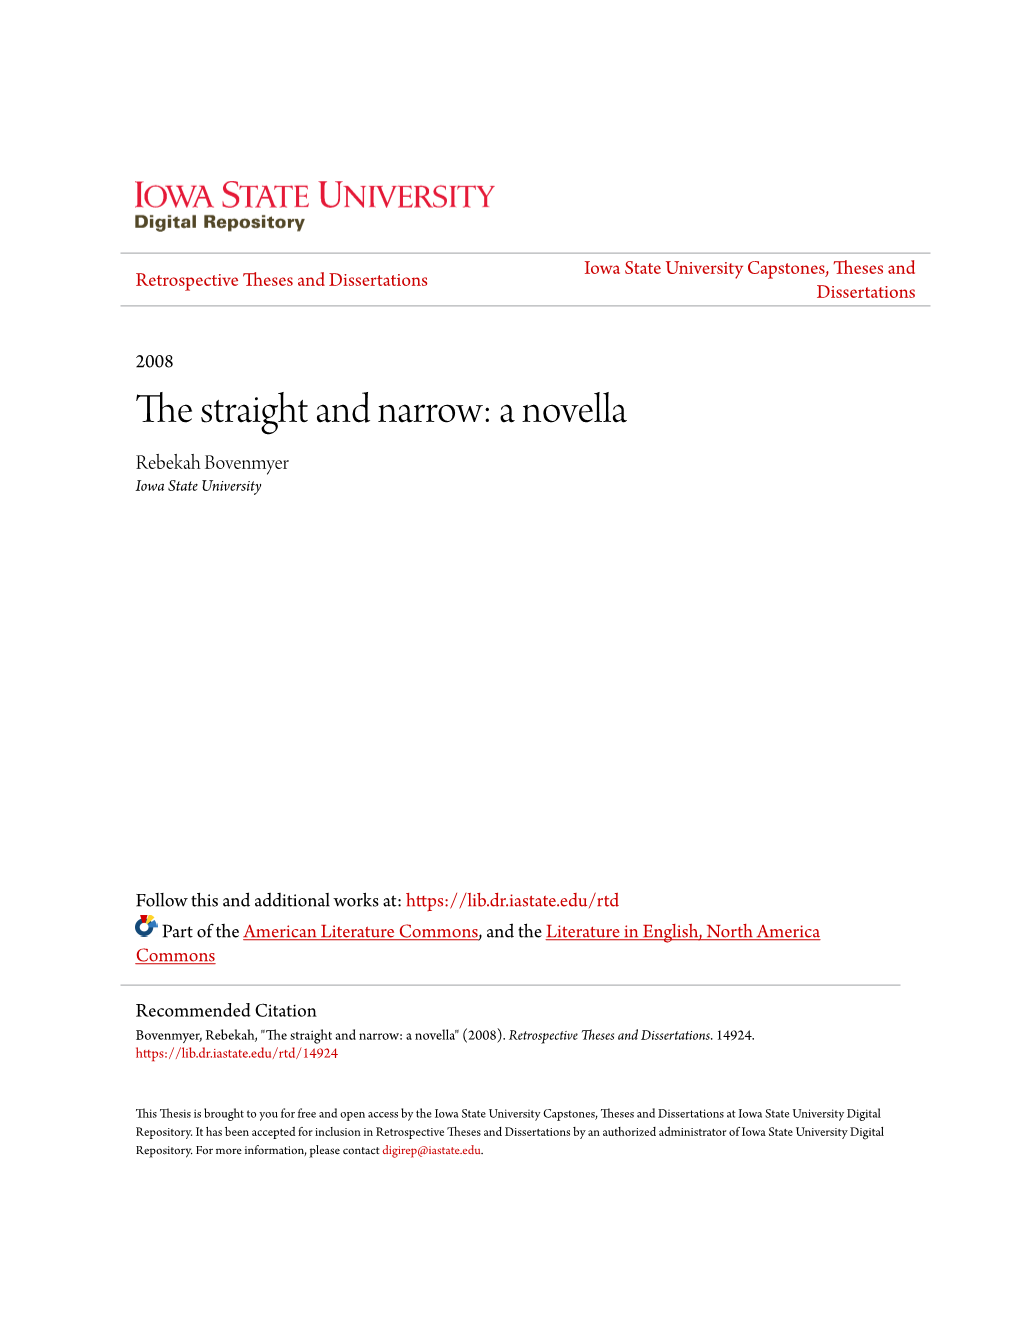 The Straight and Narrow: a Novella